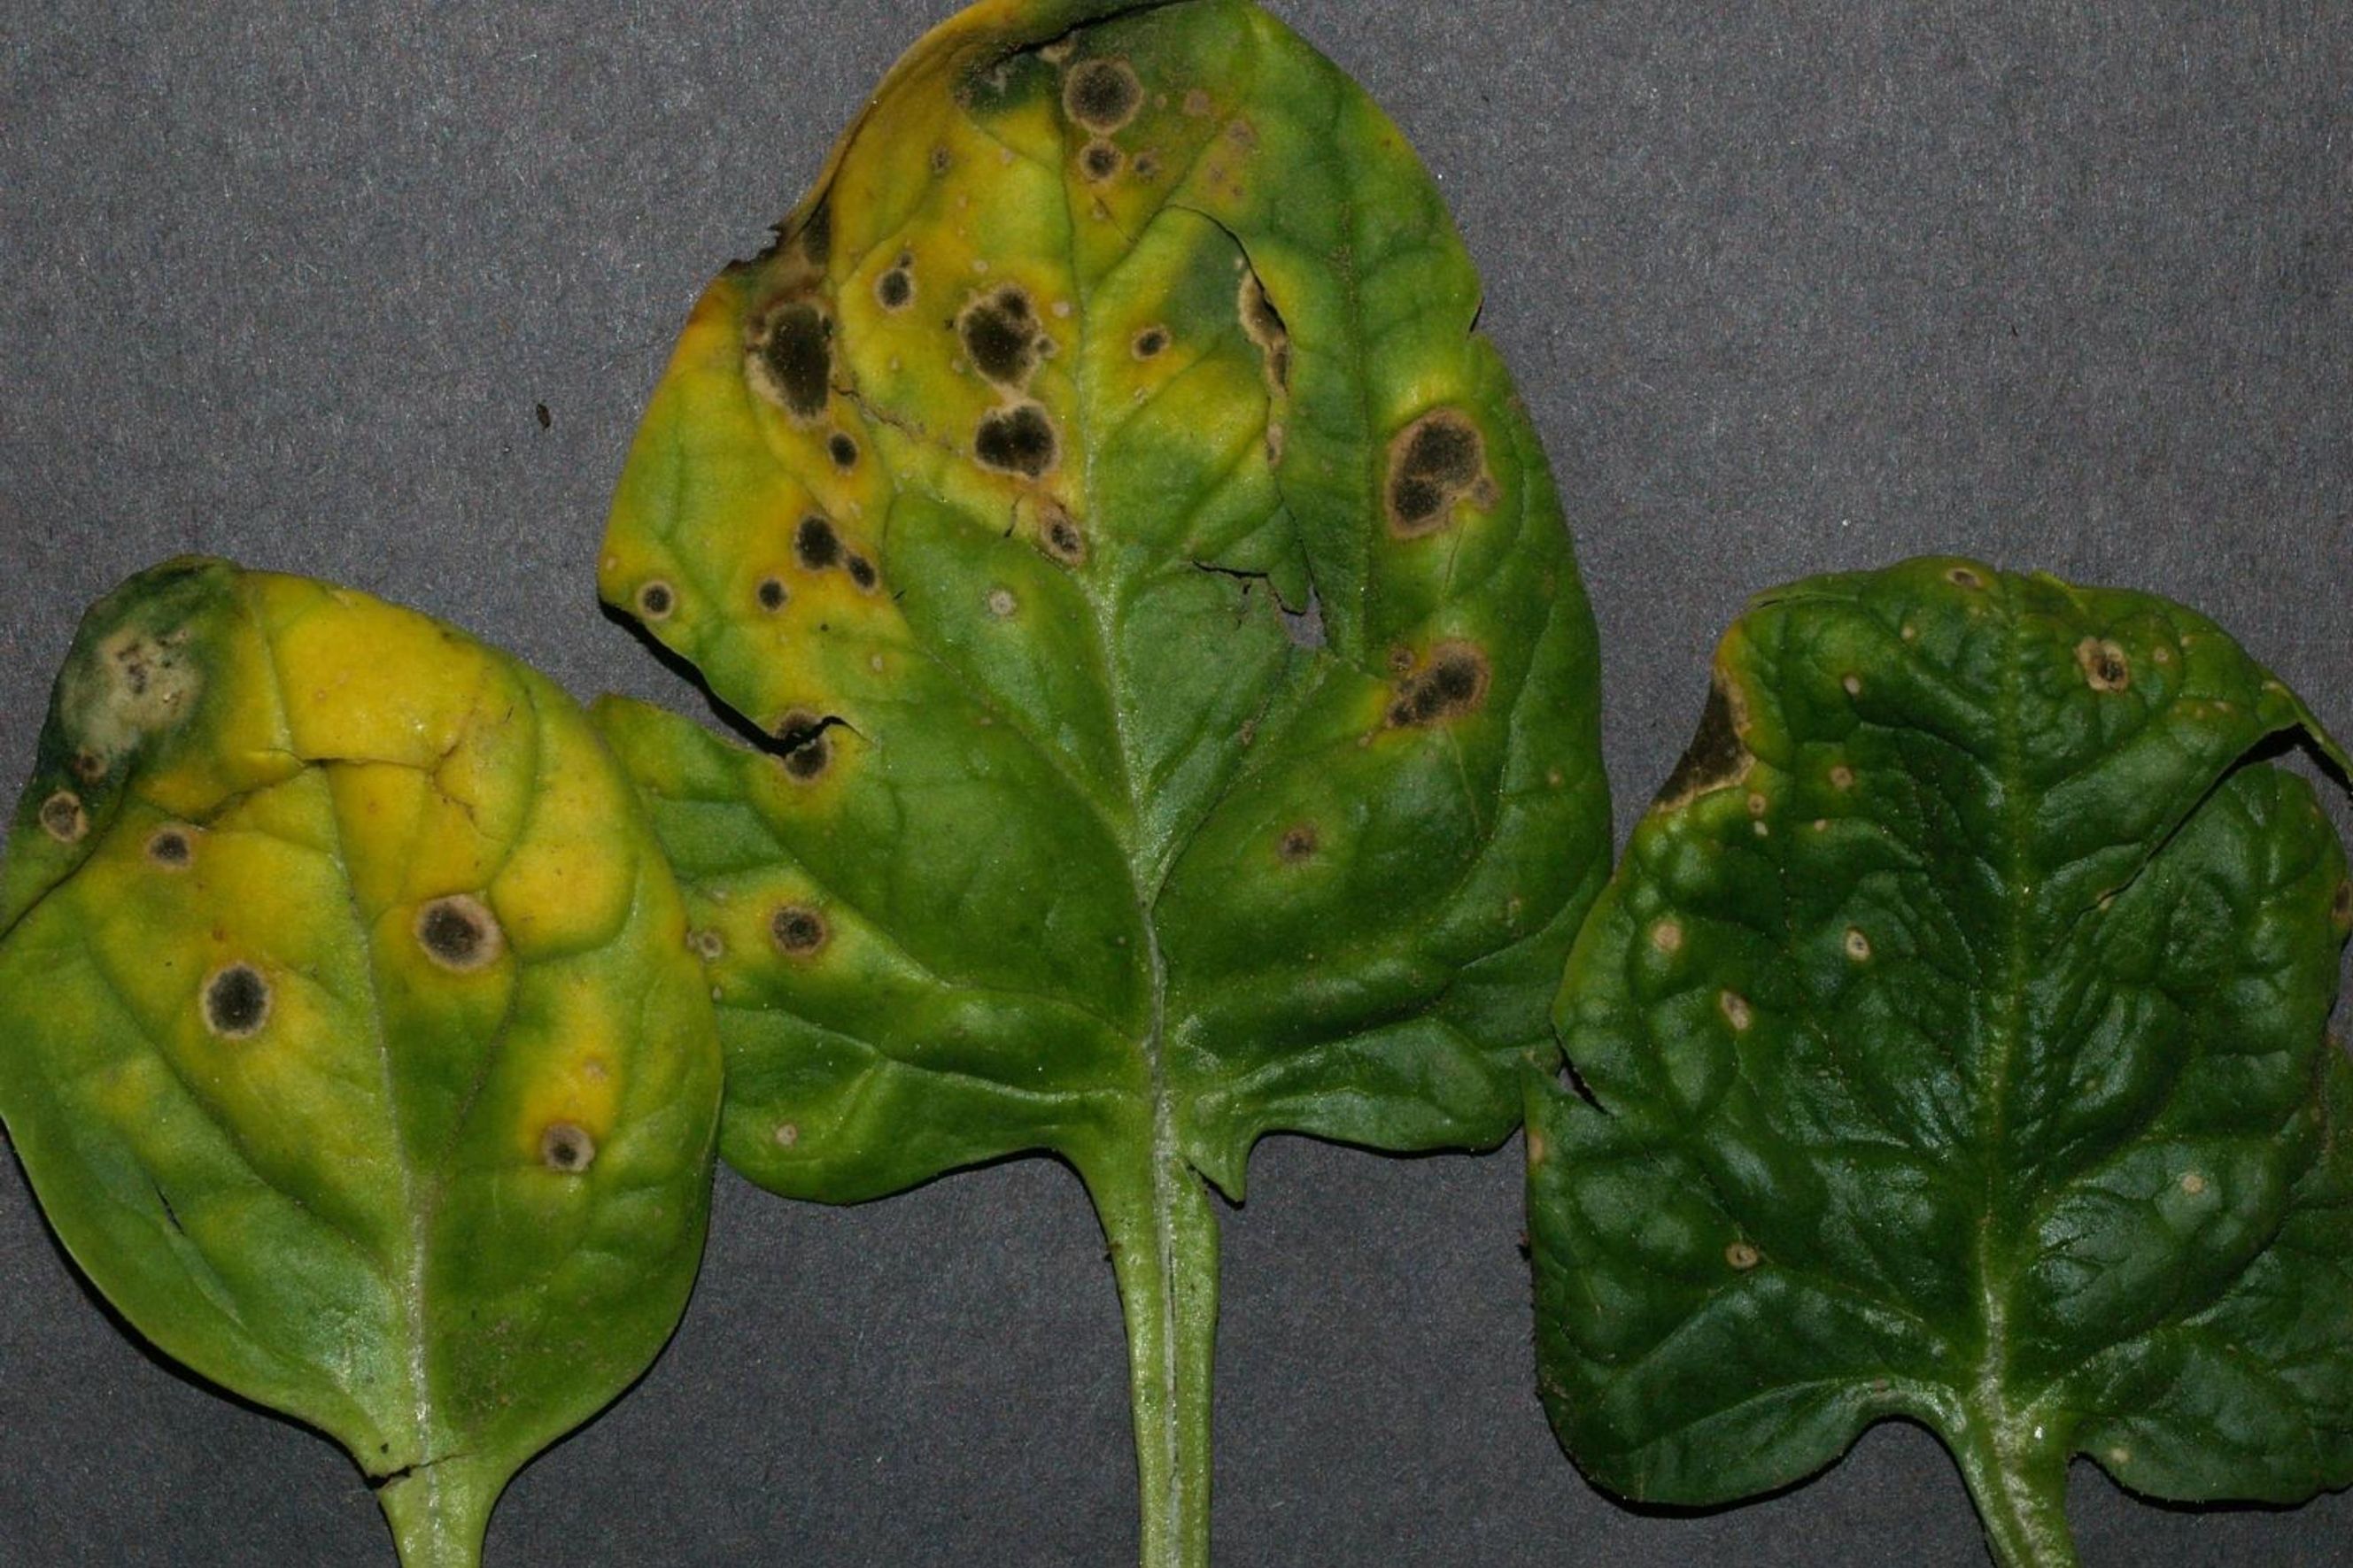 Stemphylium Leaf Spot